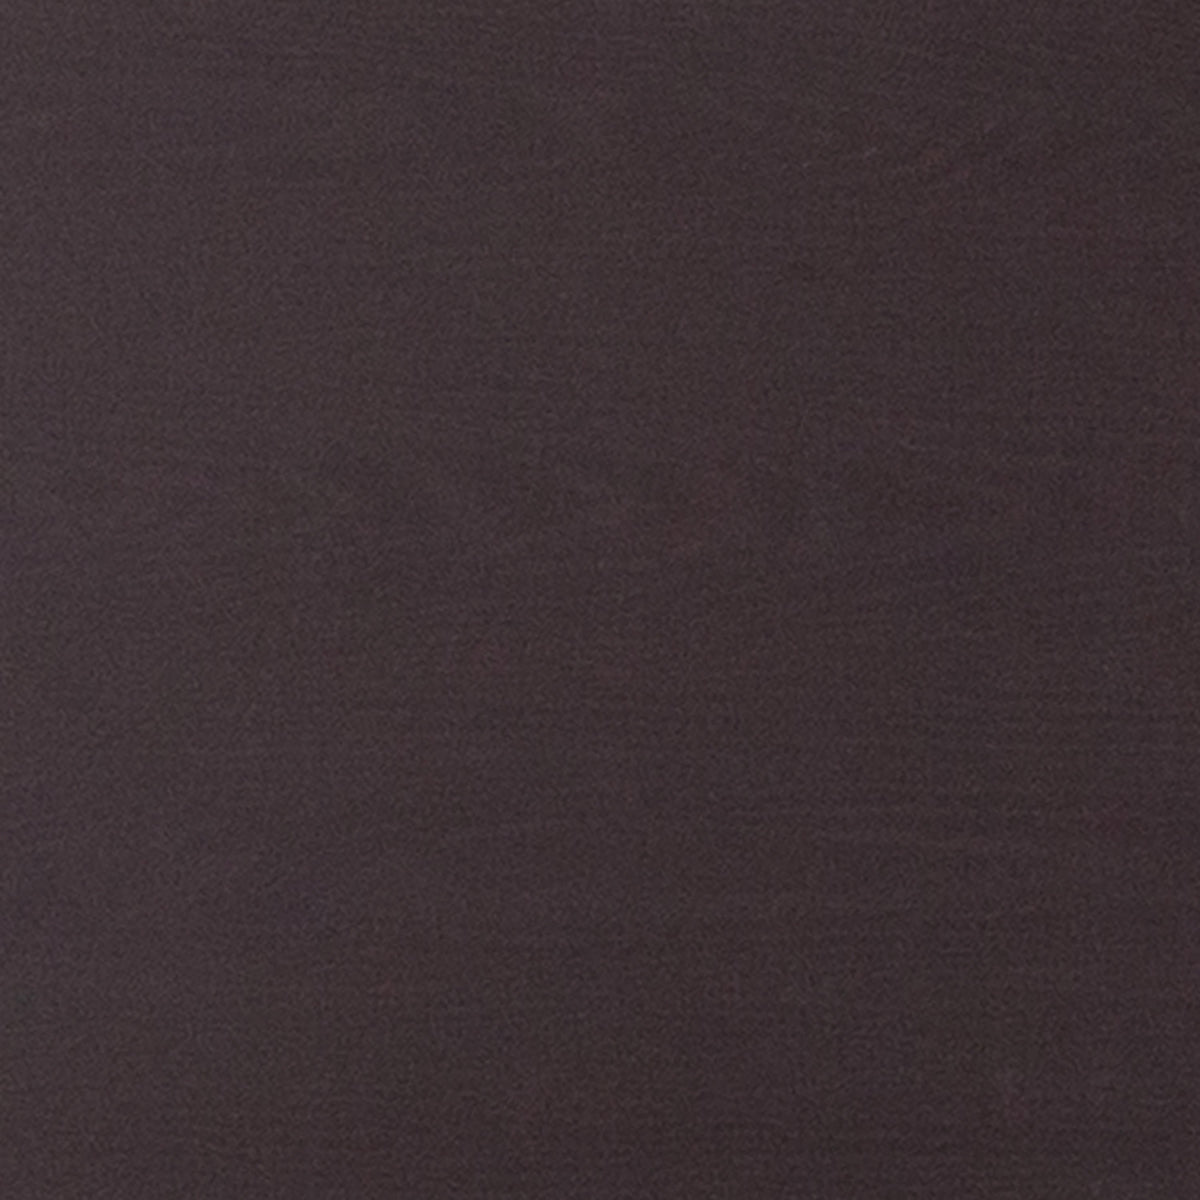 Brown |#| 2.83-Foot Square Bi-Fold Brown Wood Grain Plastic Folding Table with Handle